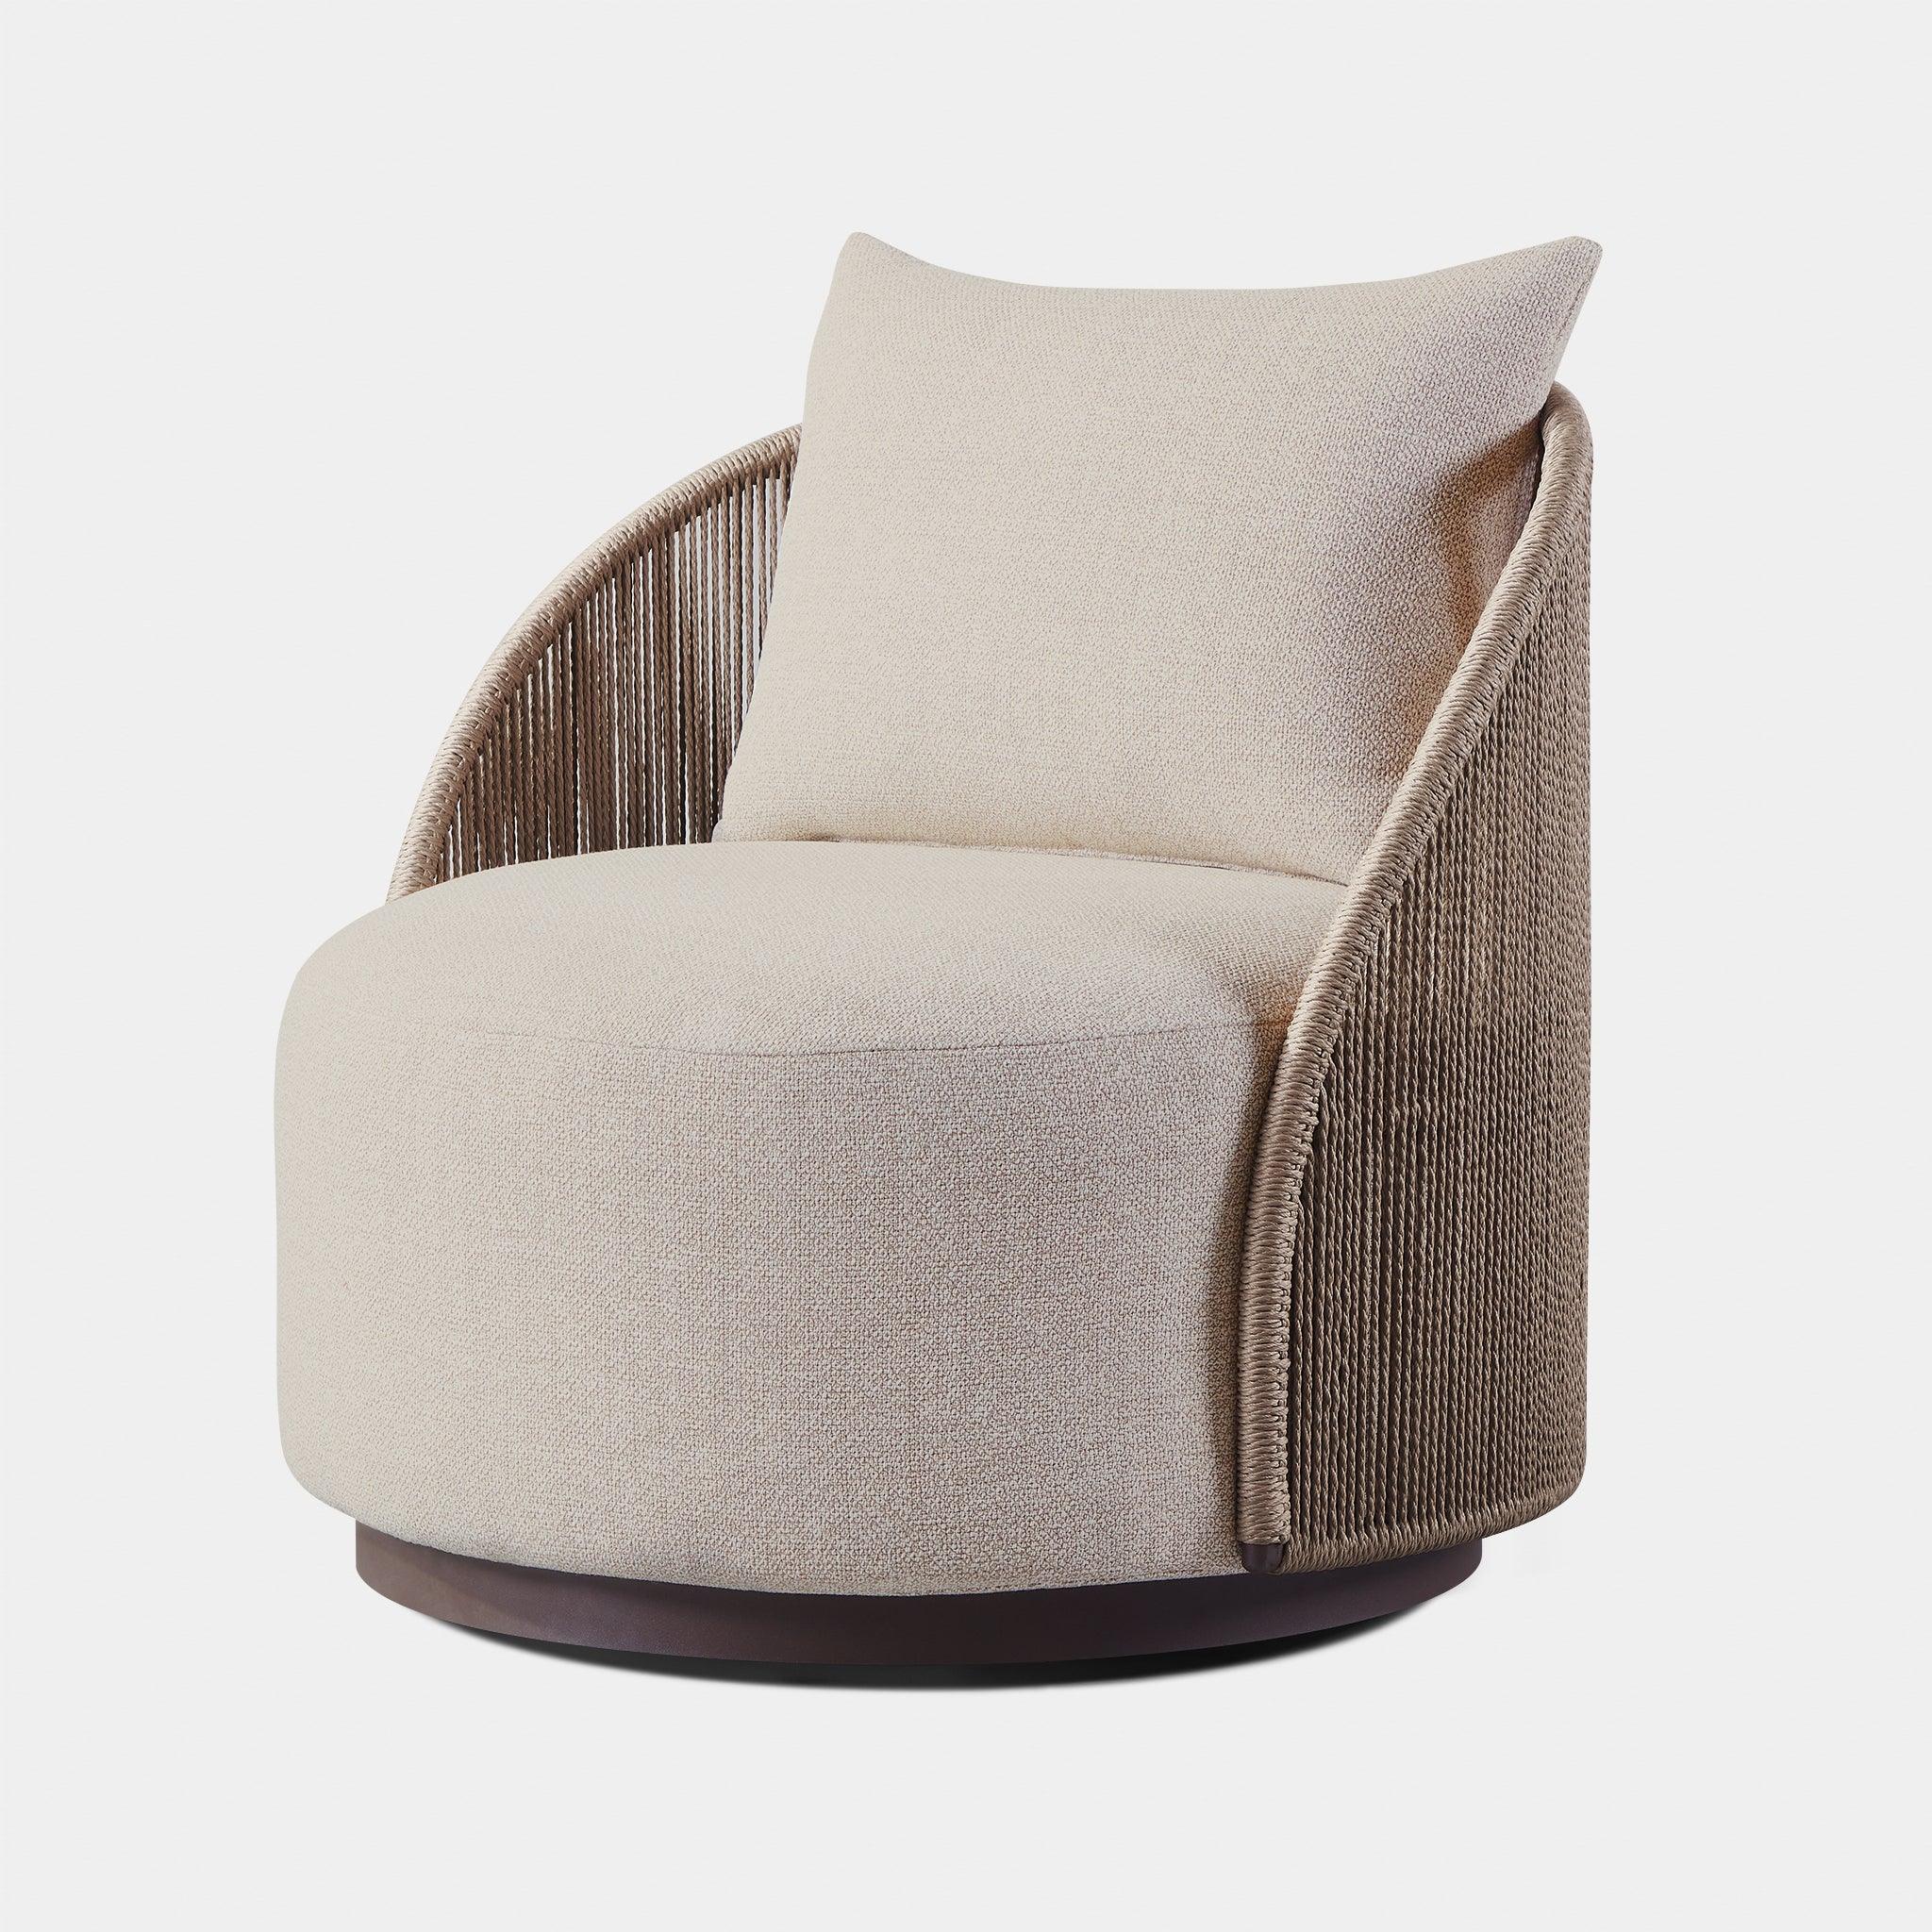 Milan Outdoor Swivel Lounge Chair